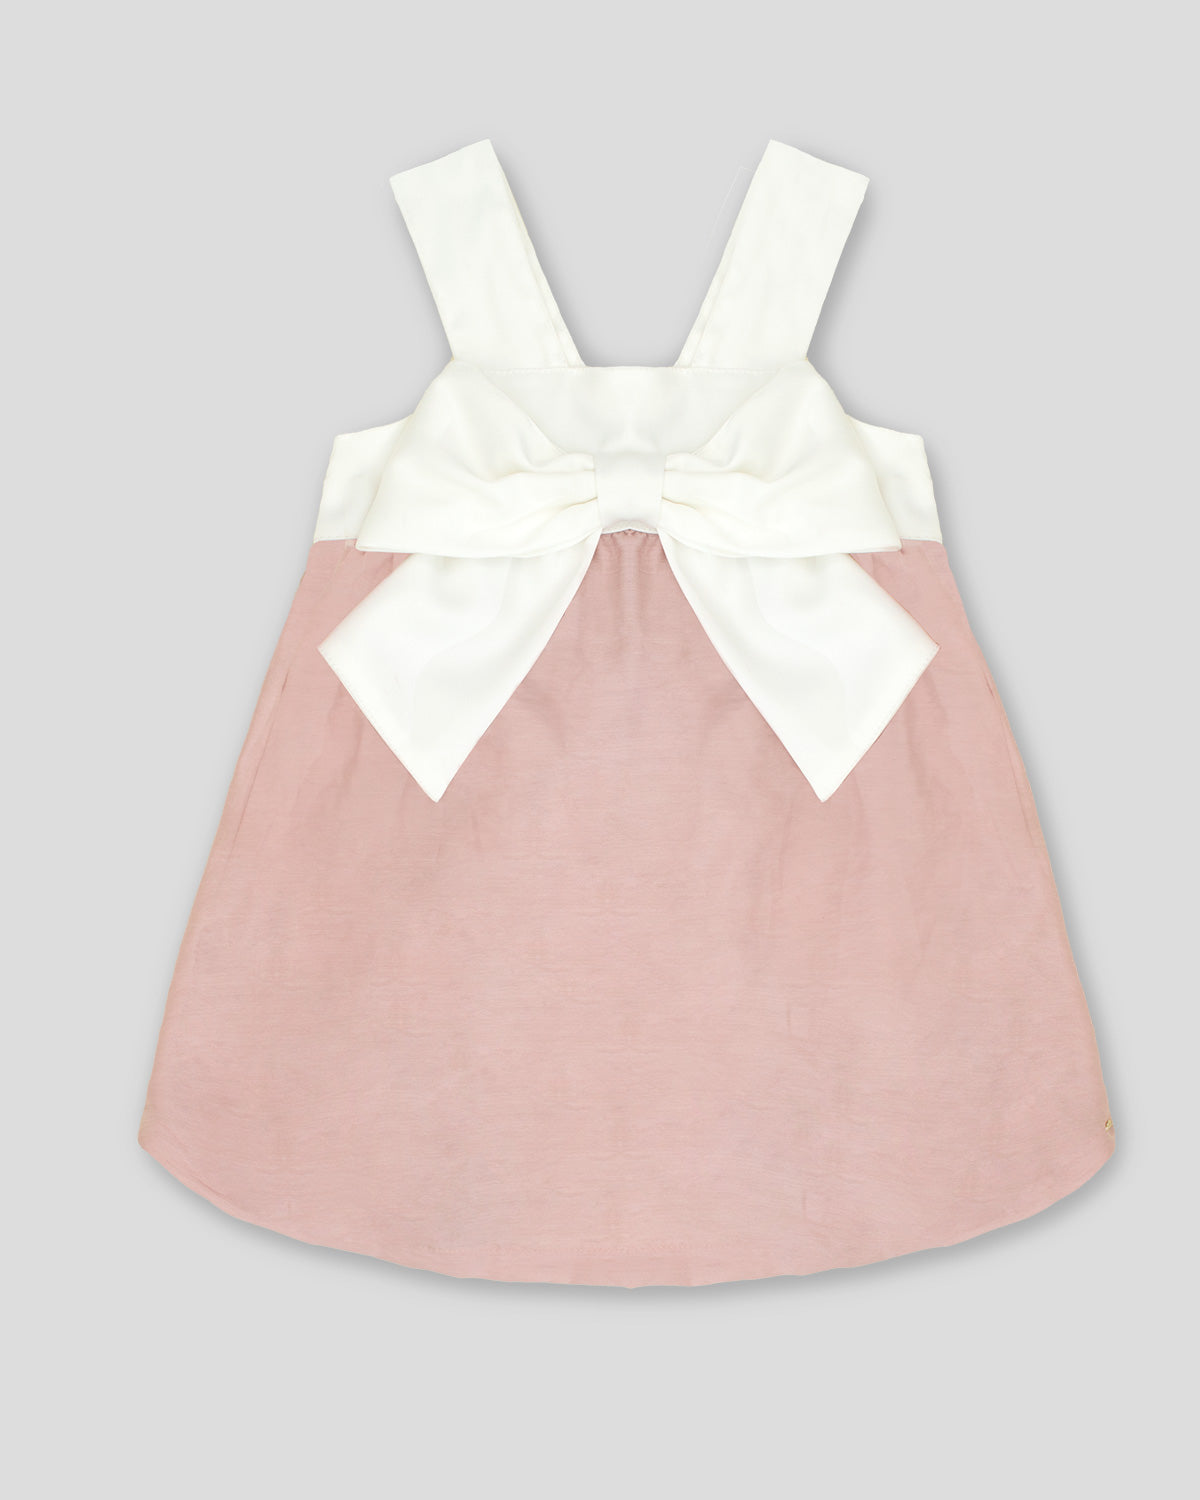 Vestido palo de rosa con moño y tiras blancas para niña